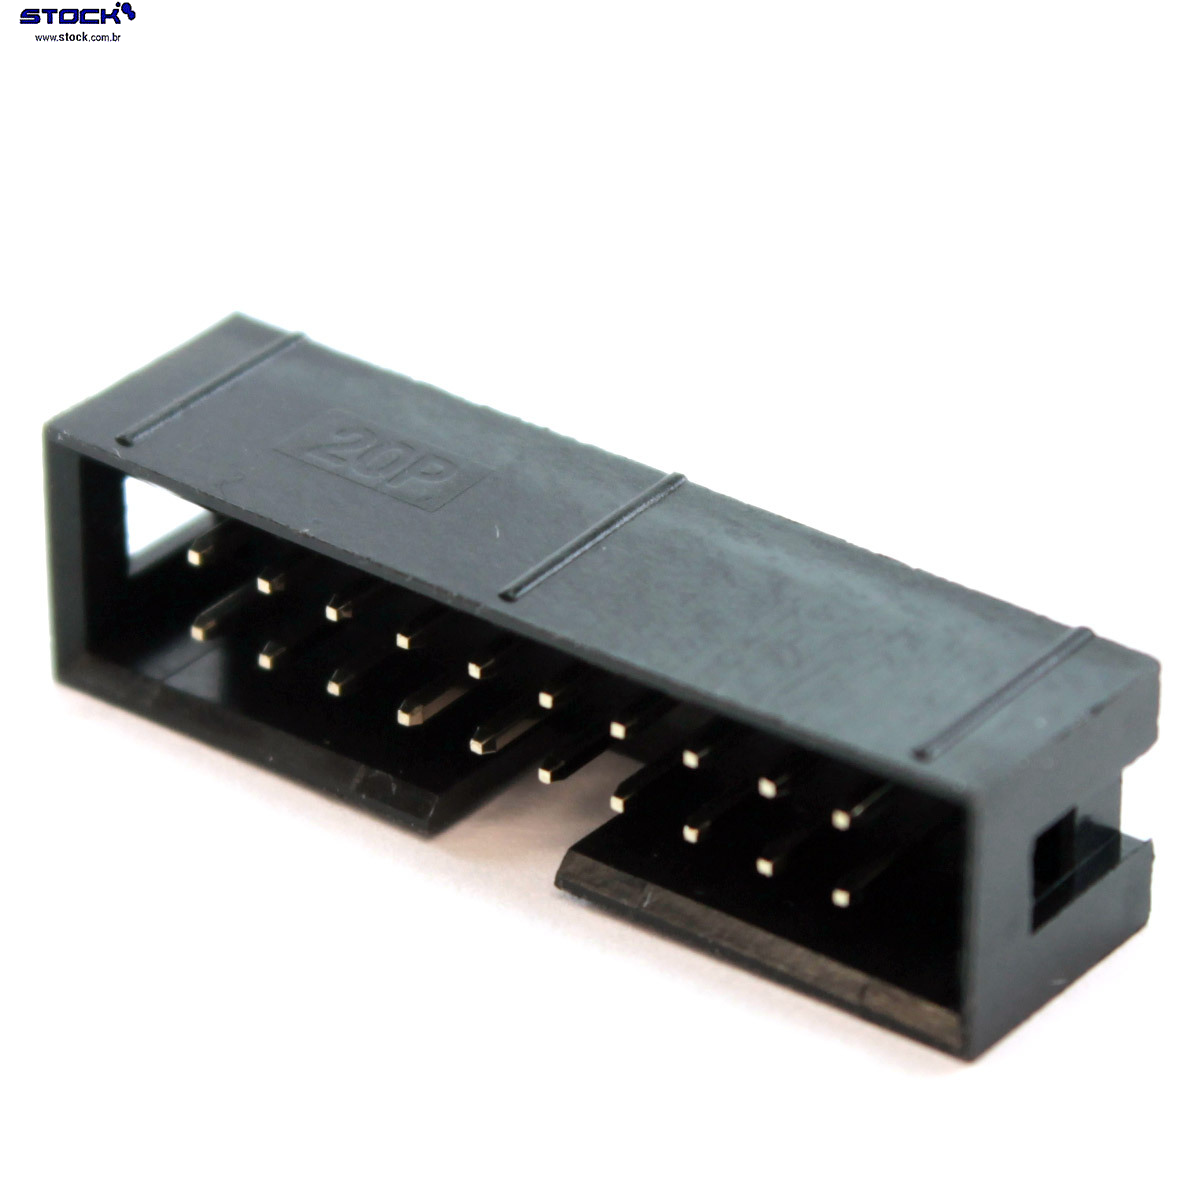 IDC Box Header p/ PCI 20 Pinos Macho Pitch 2,54mm- Fileira dupla– 02x10 180 Graus - Preto